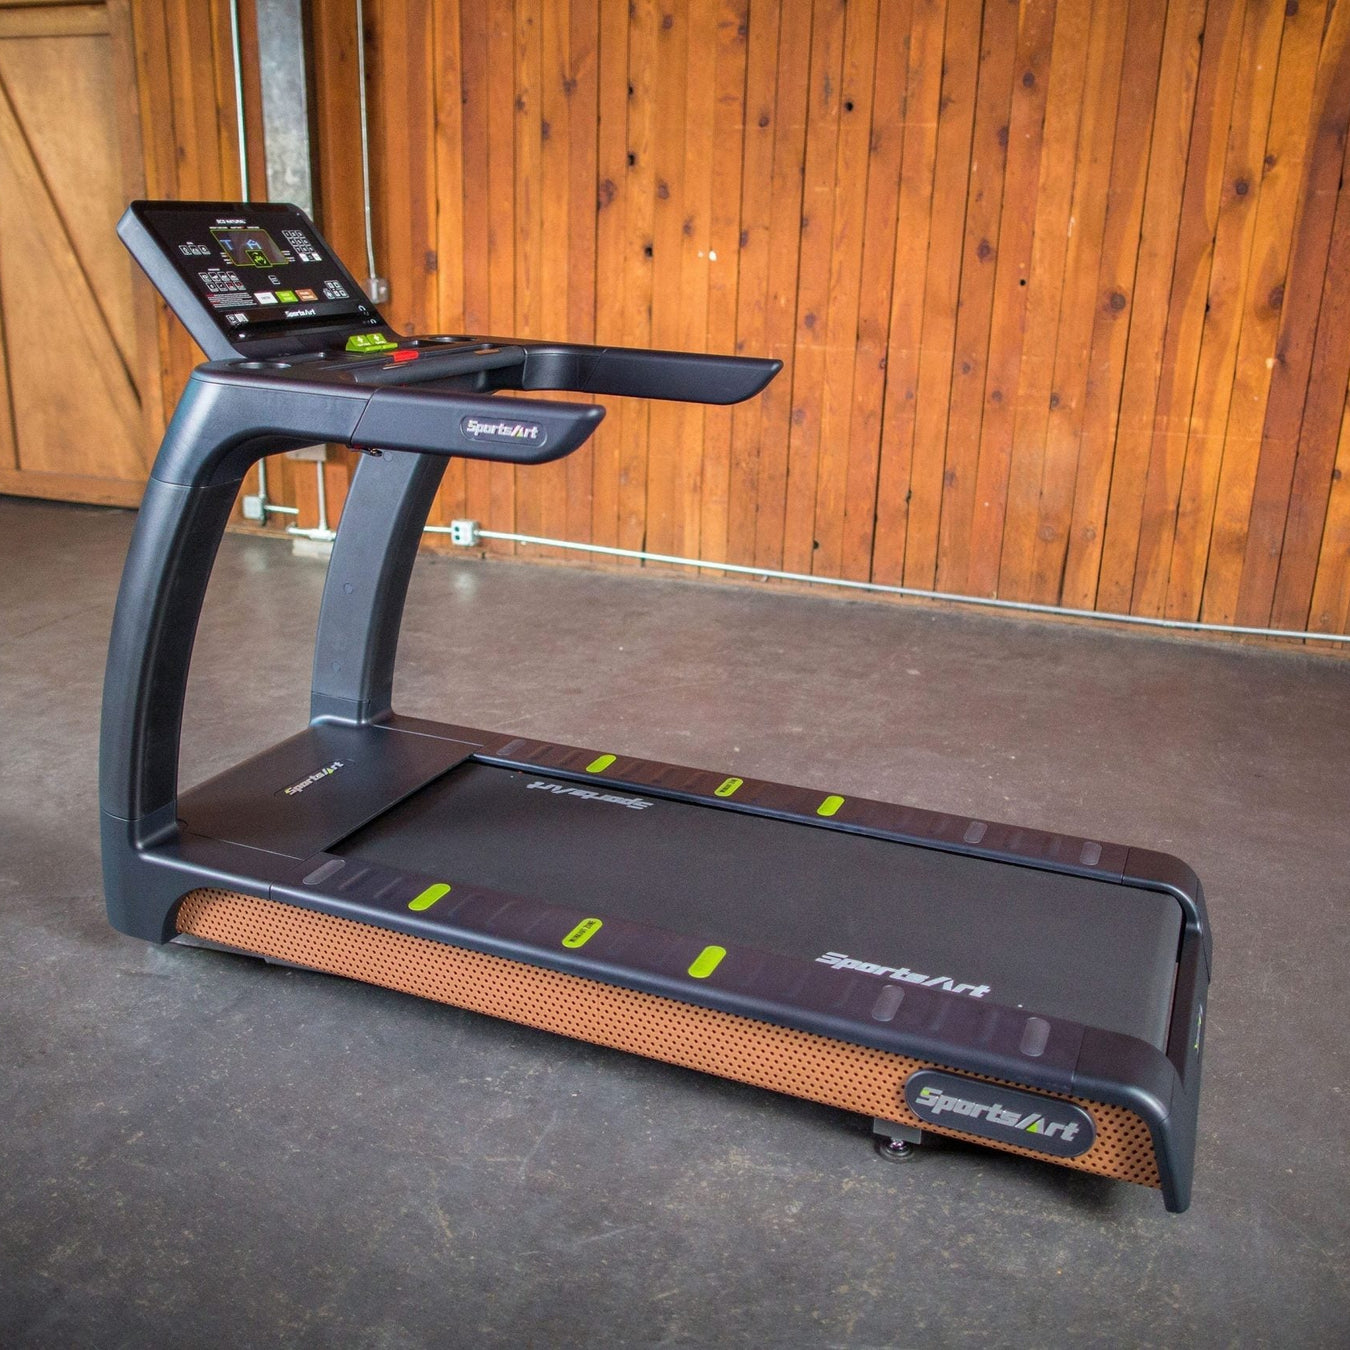 SportsArt Treadmill For Sale